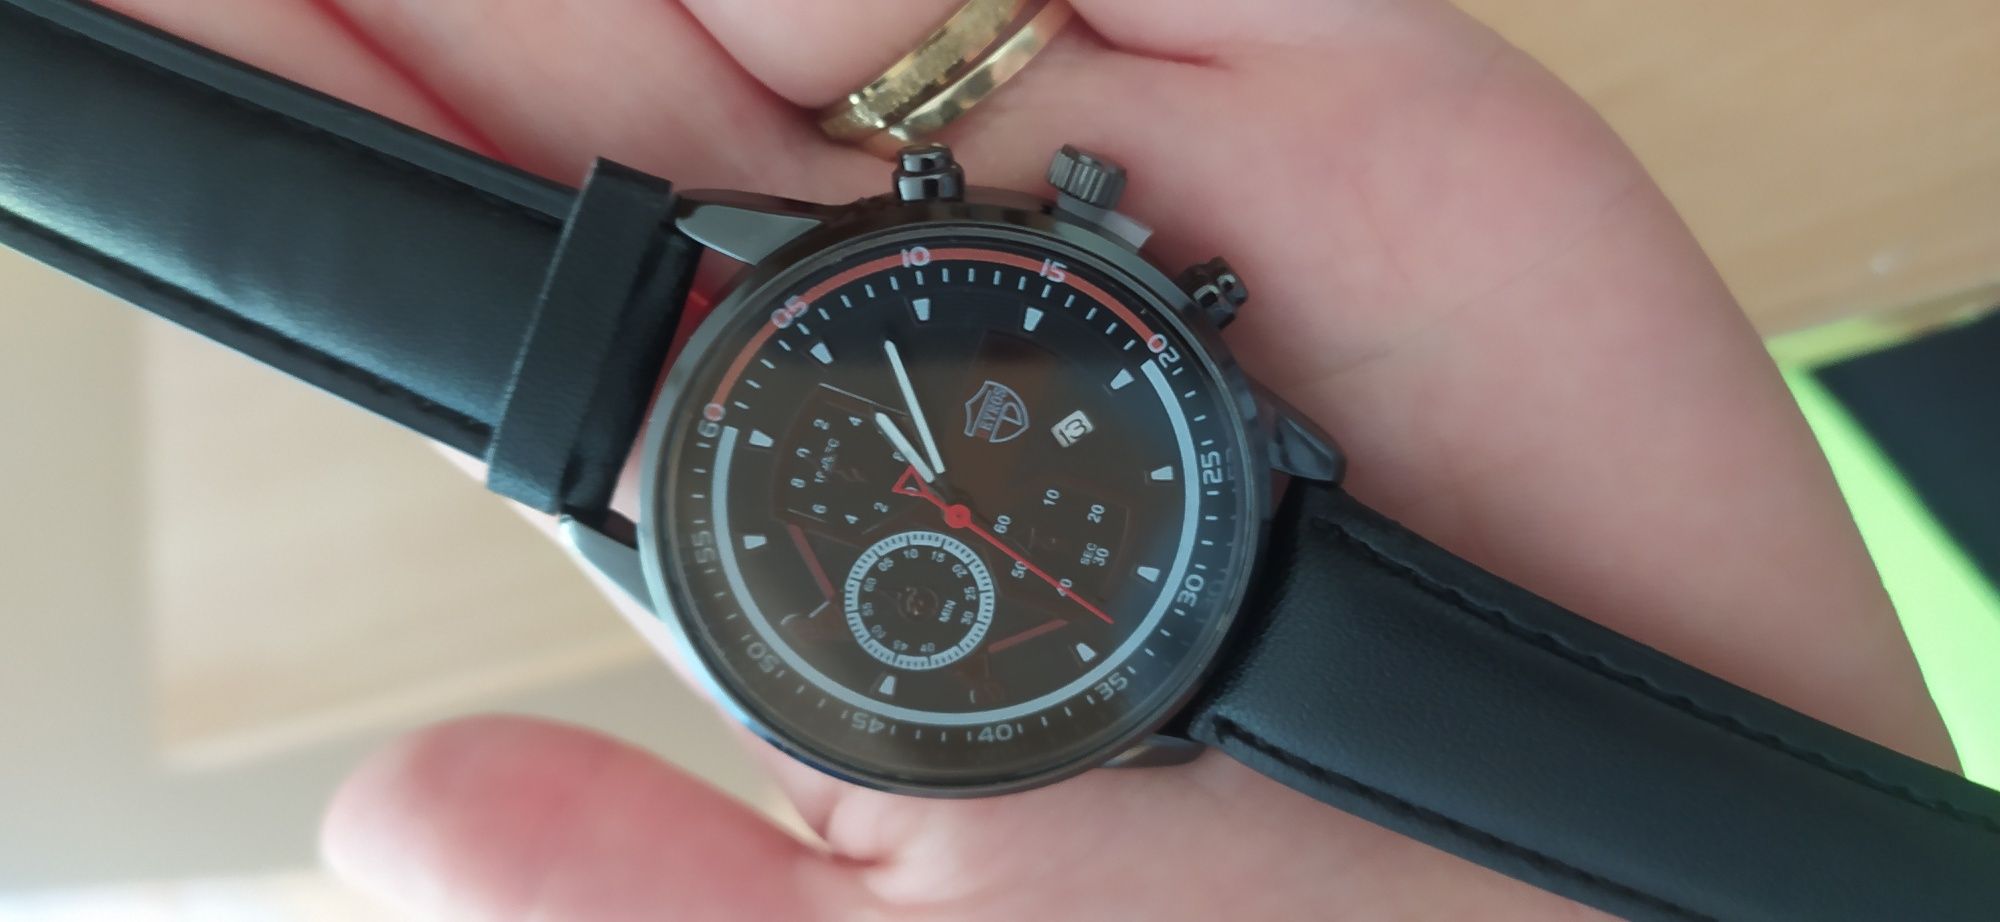 Nowy zegarek, czarny pasek + naszyjnik gratis